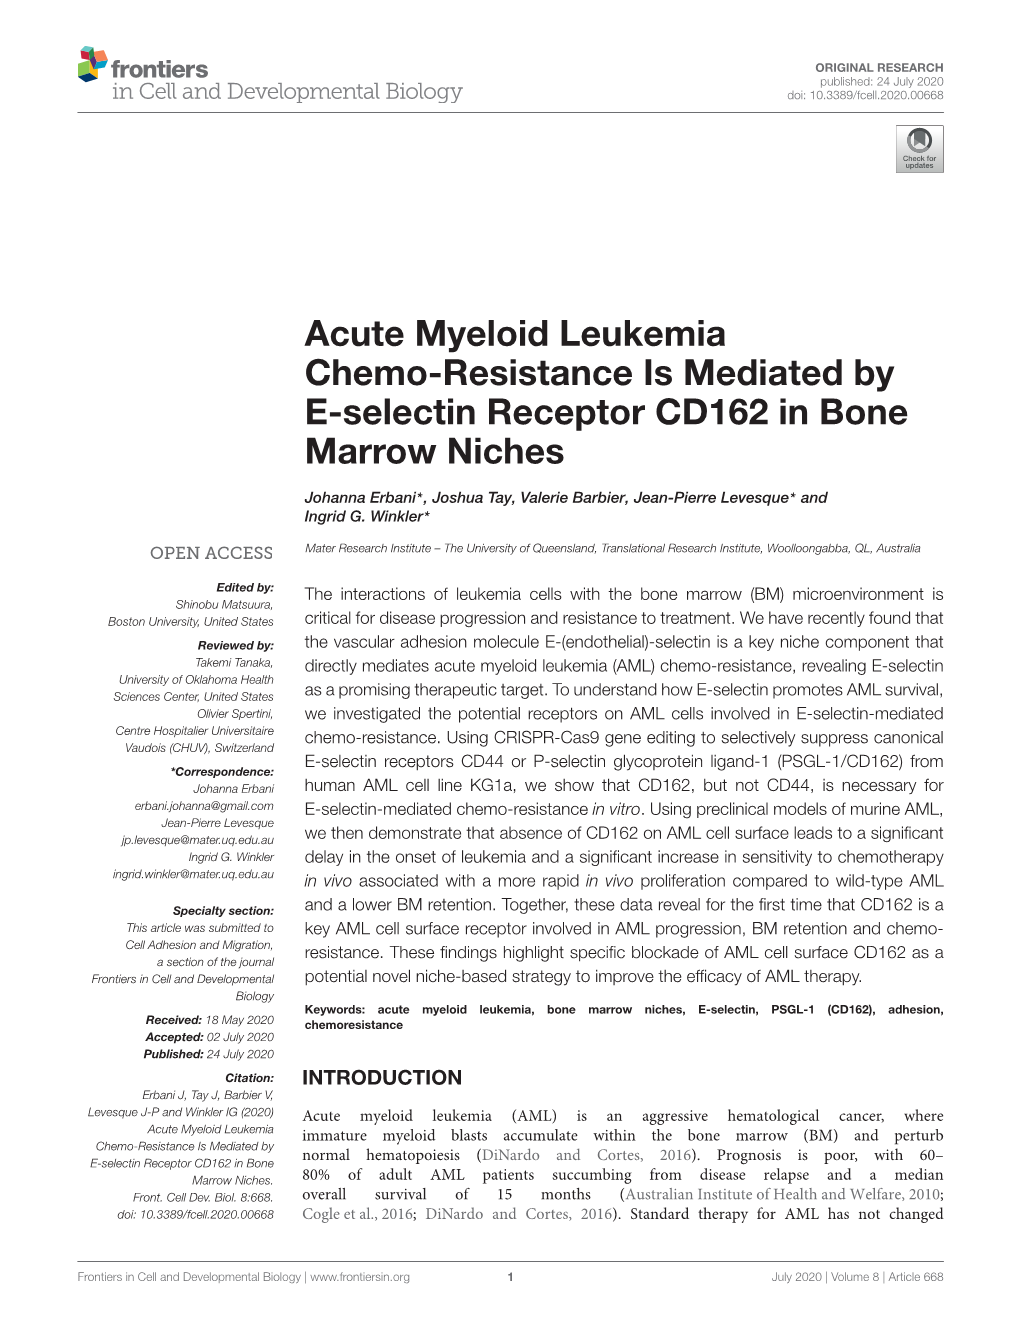 Acute Myeloid Leukemia Chemo-Resistance Is Mediated by E-Selectin Receptor CD162 in Bone Marrow Niches